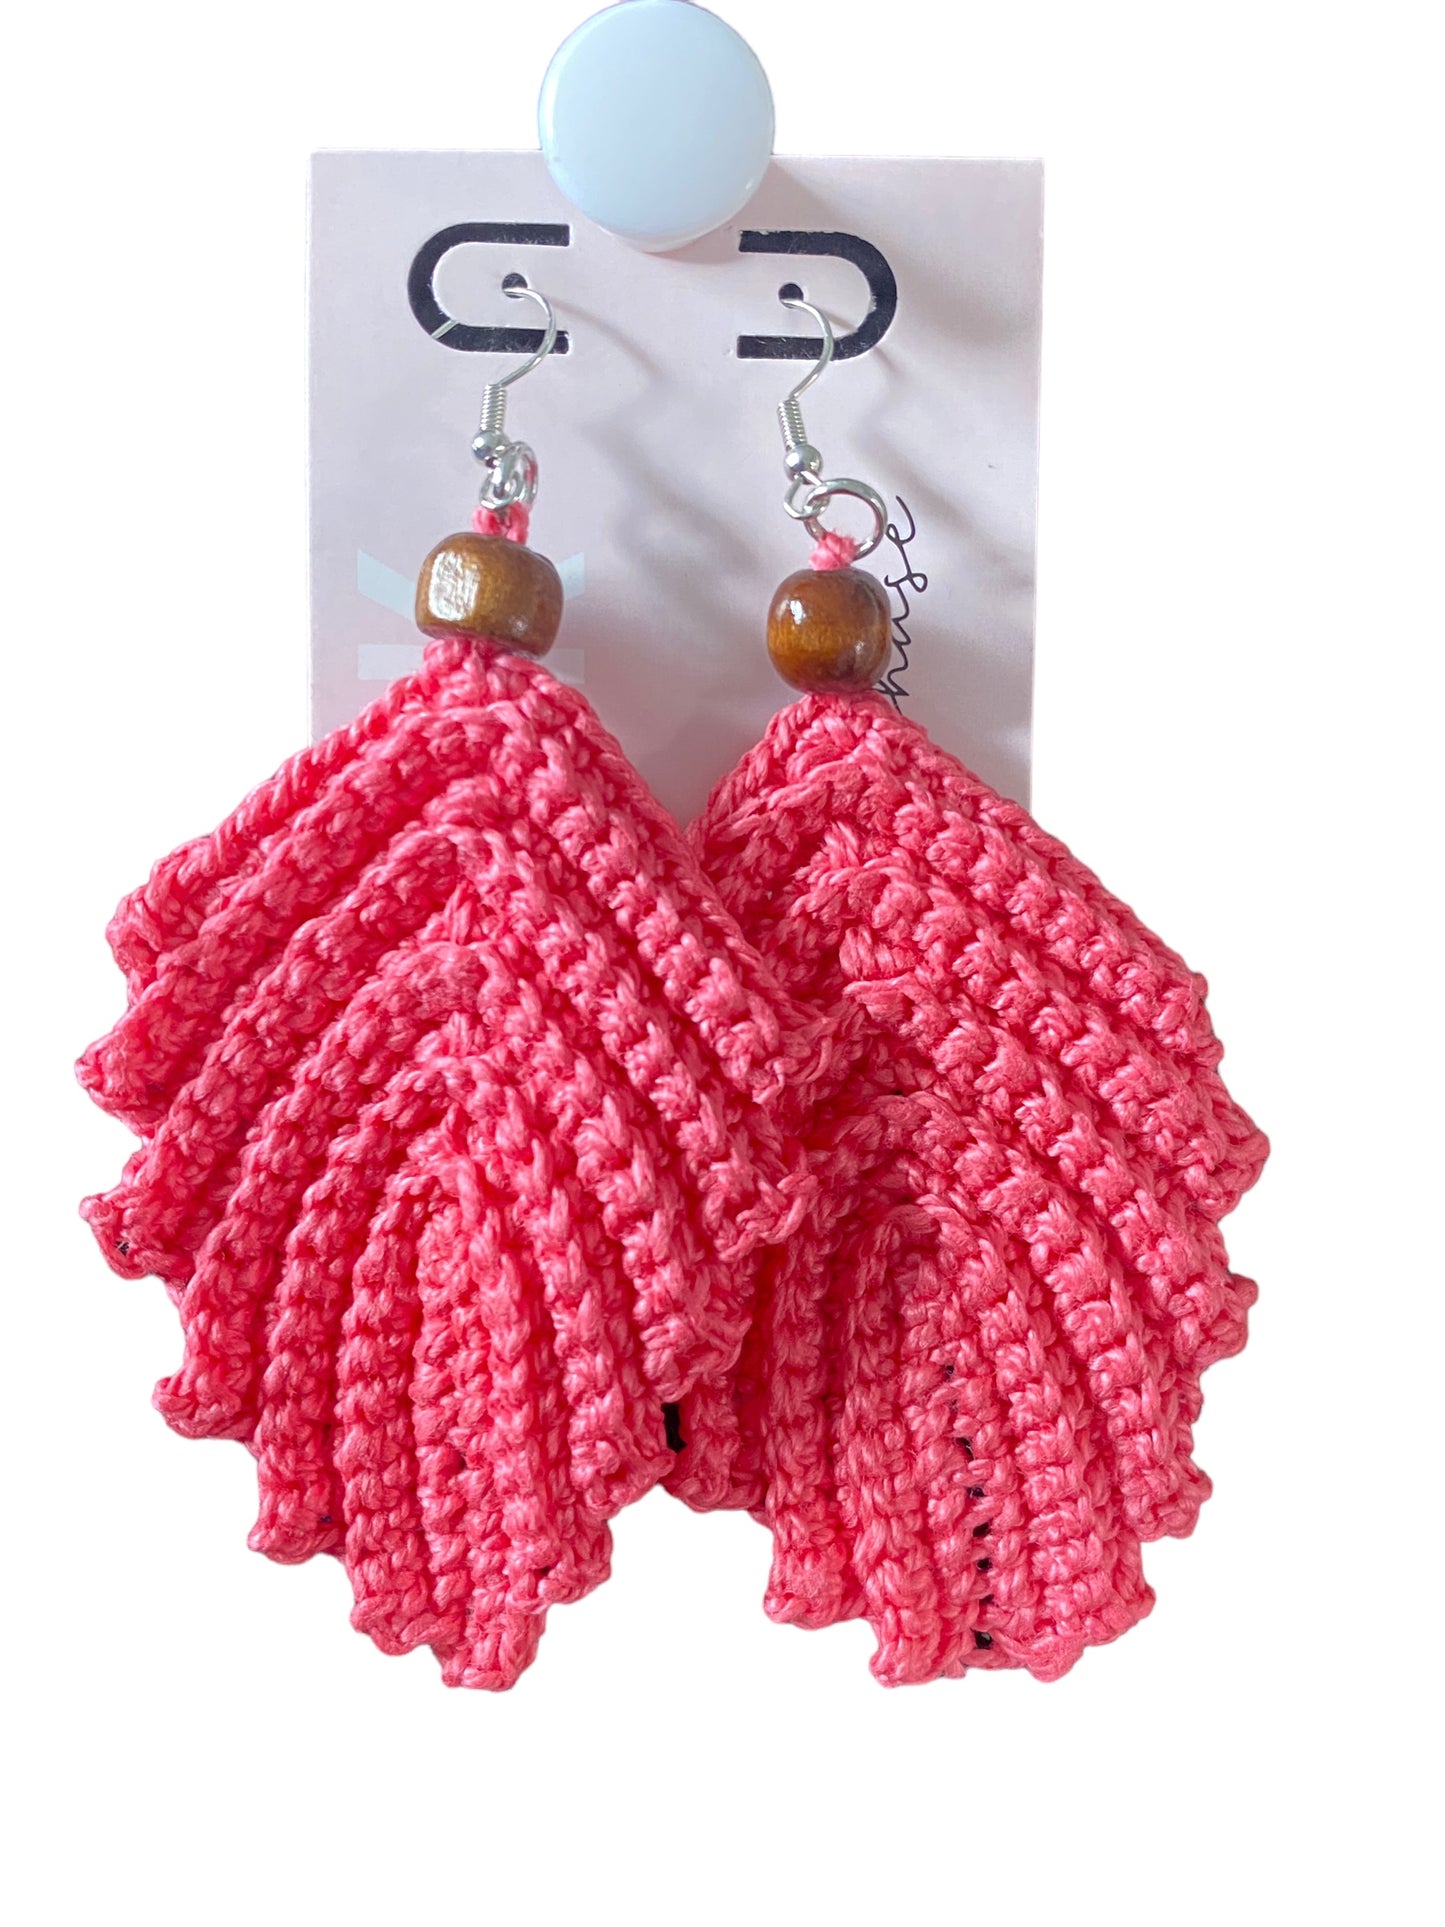 Blush|Feather Earrings|Crochet|Handmade